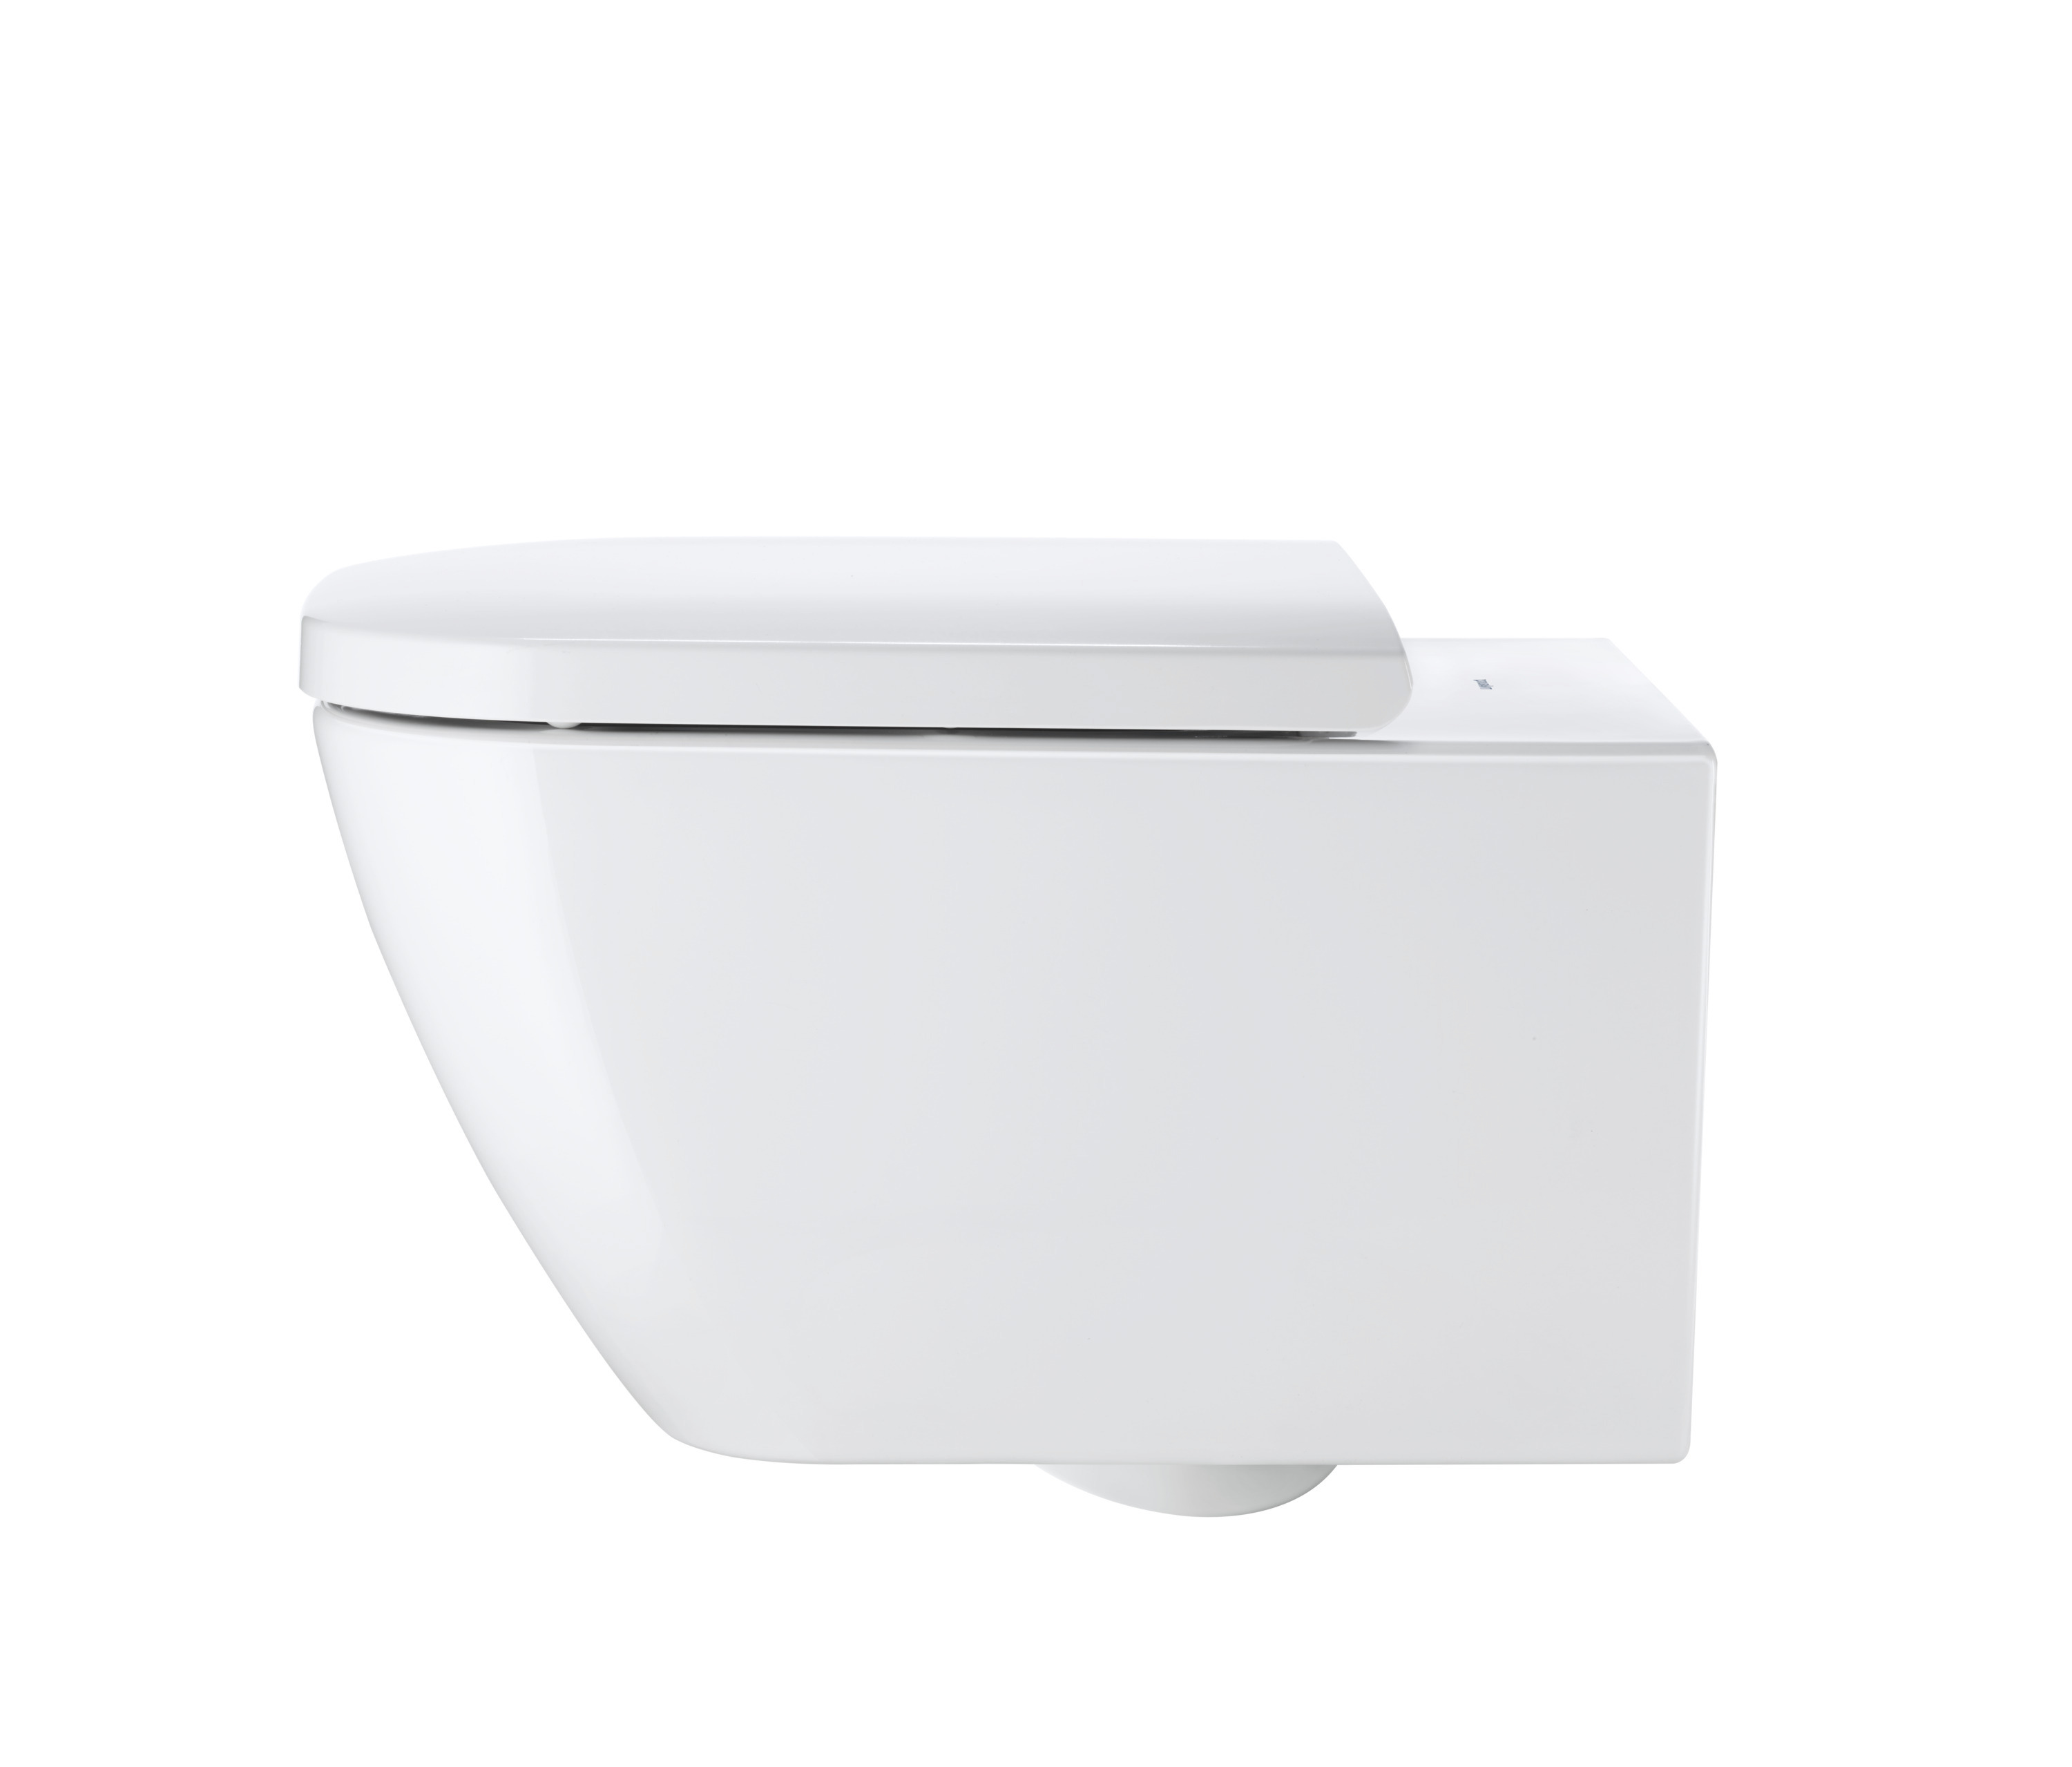 Wand-WC Happy D.2 540 mm Tiefspüler, Durafix, weiß